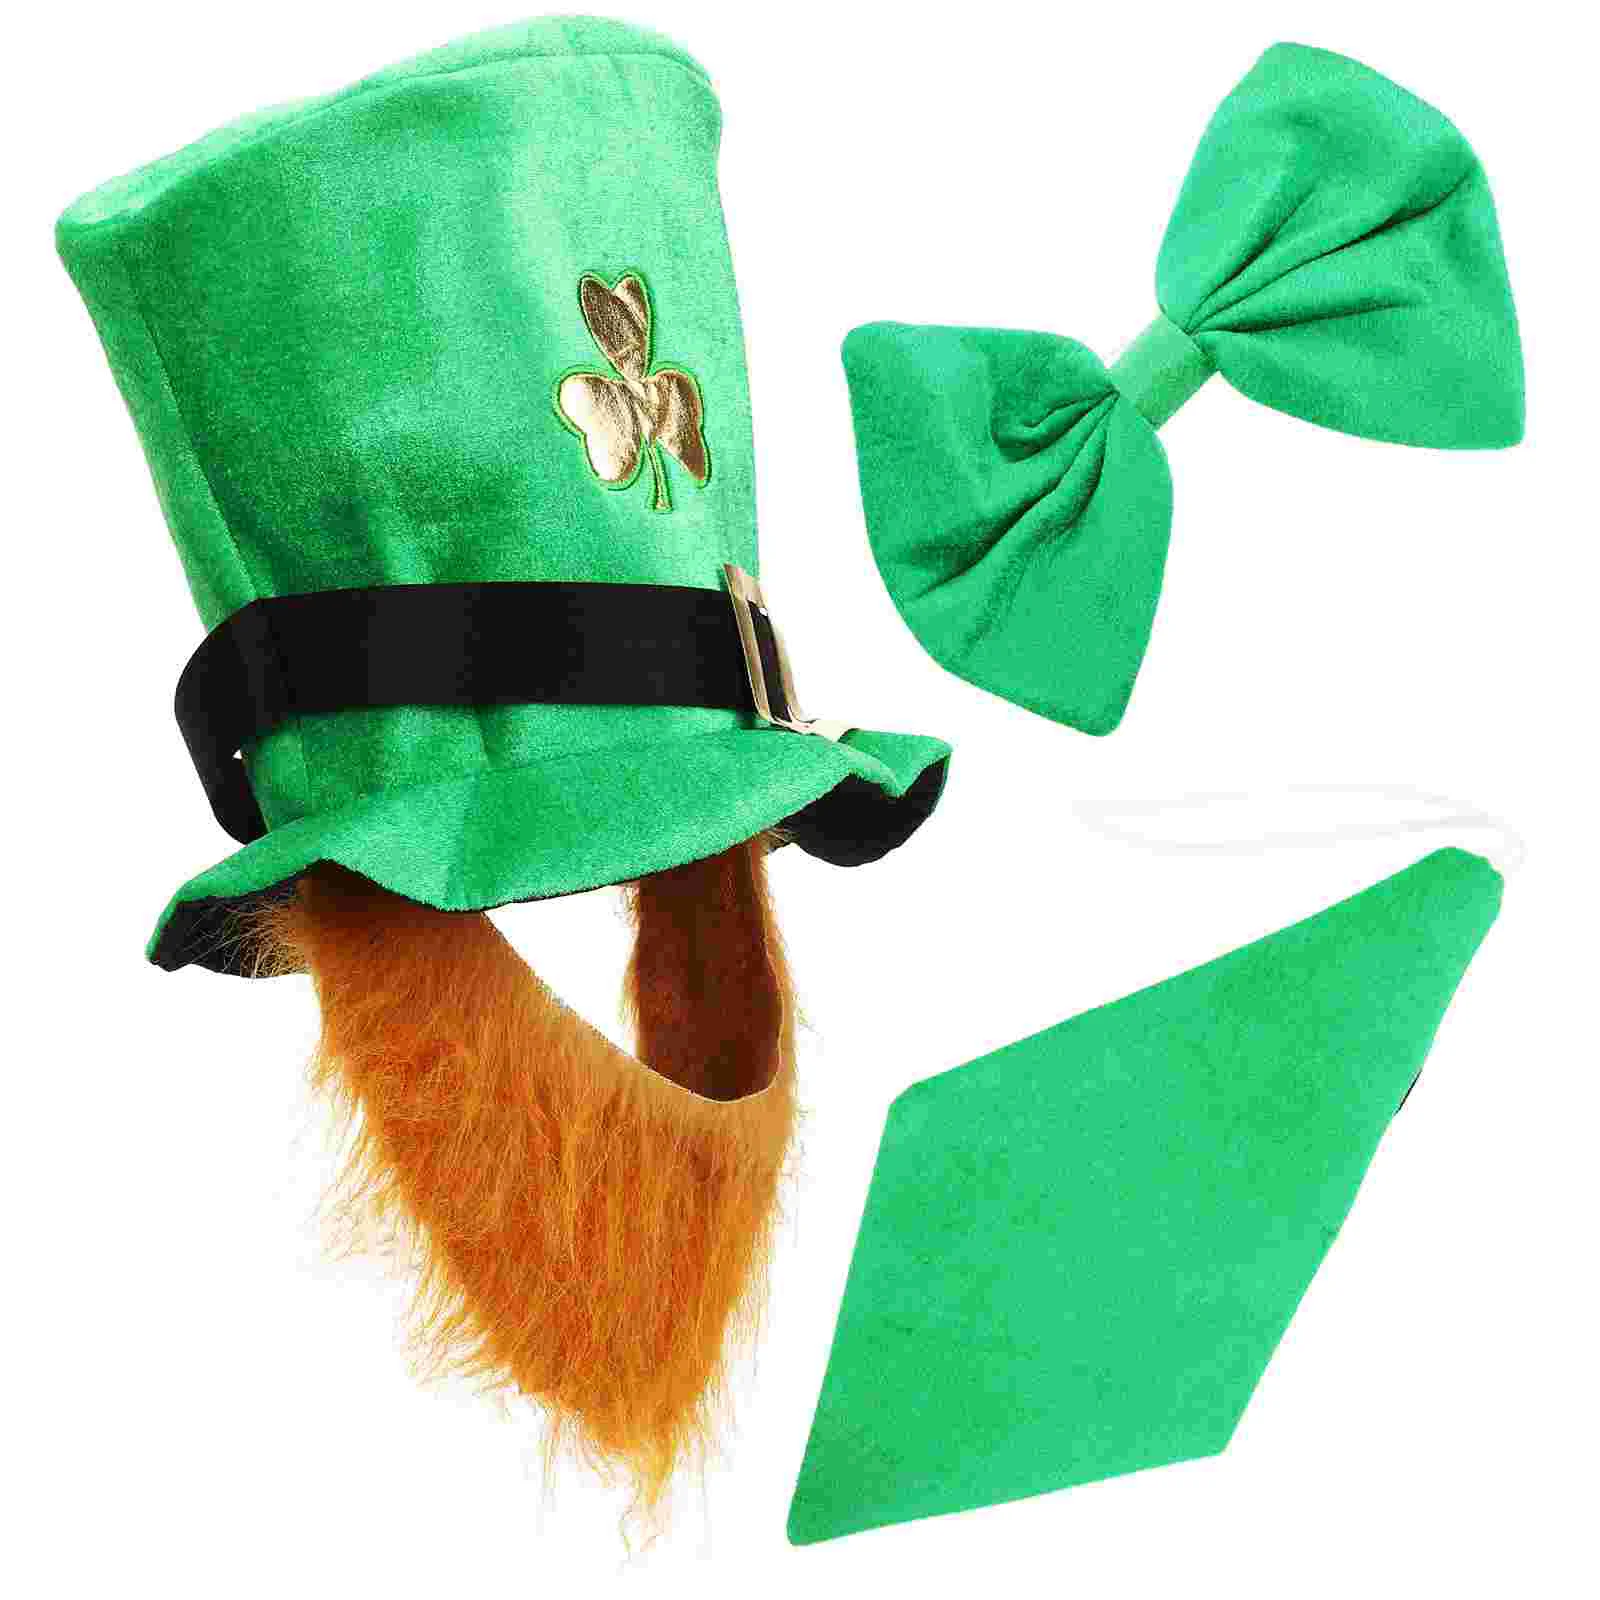 Купи Patrick Day S St Hat Costume Party Patricks Beard Accessories Leprechaun Favor Green Tie Bow Shamrock Ornament Set Decor за 746 рублей в магазине AliExpress